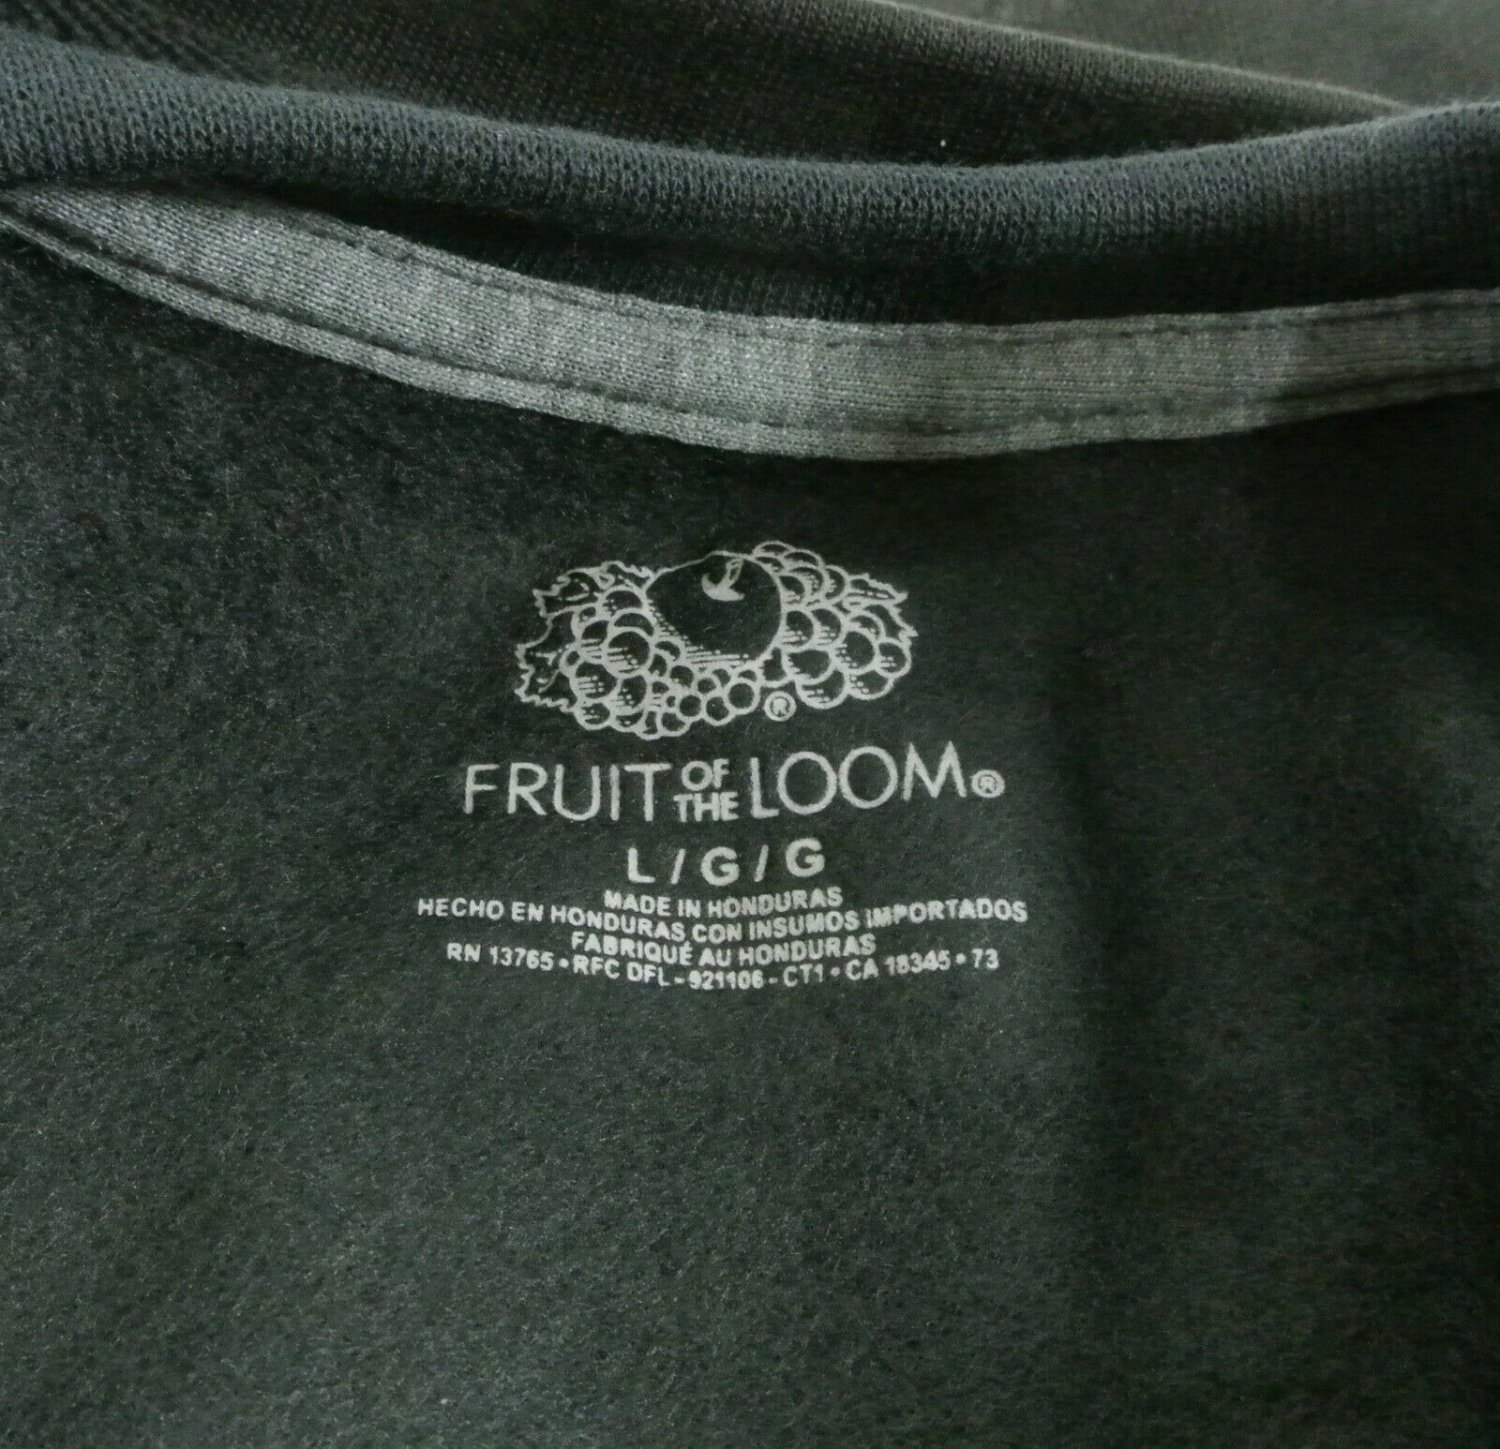 LITTLE CAESARS PIZZA Employee Uniform Sweatshirt Black Size L 50 NWT NEW